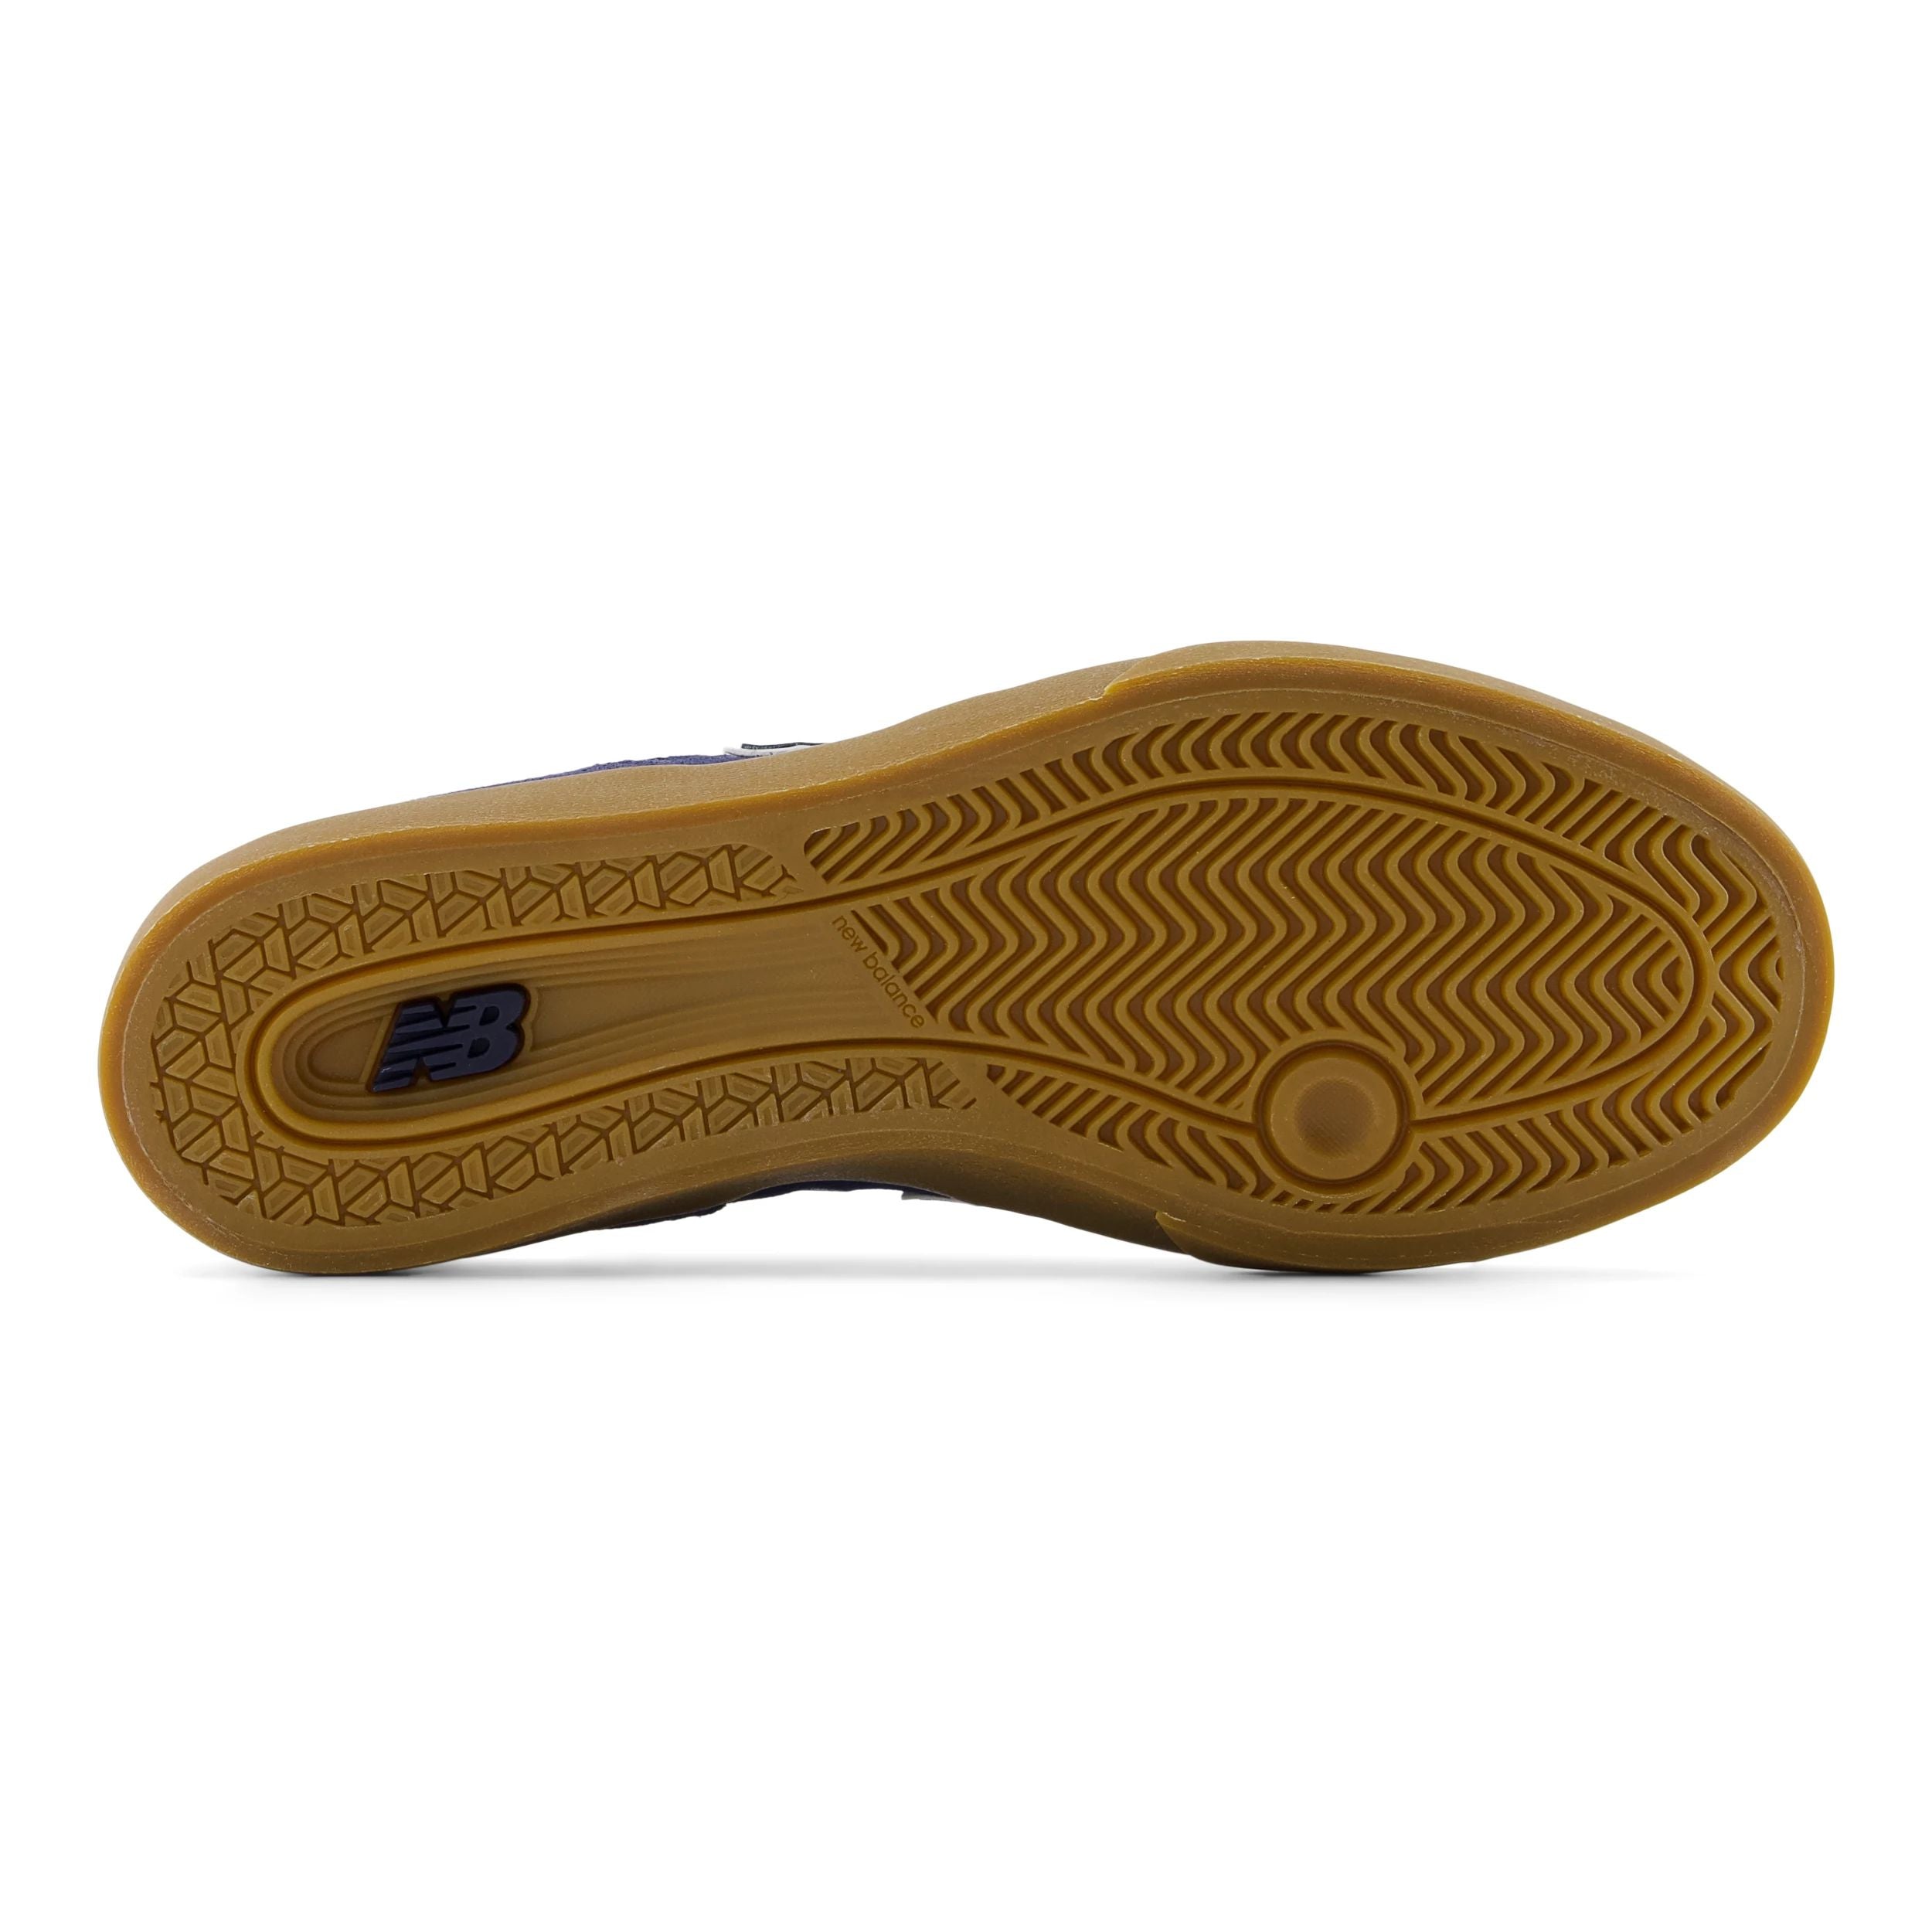 Navy/Gum NM574 Vulc NB Numeric Skate Shoe Bottom